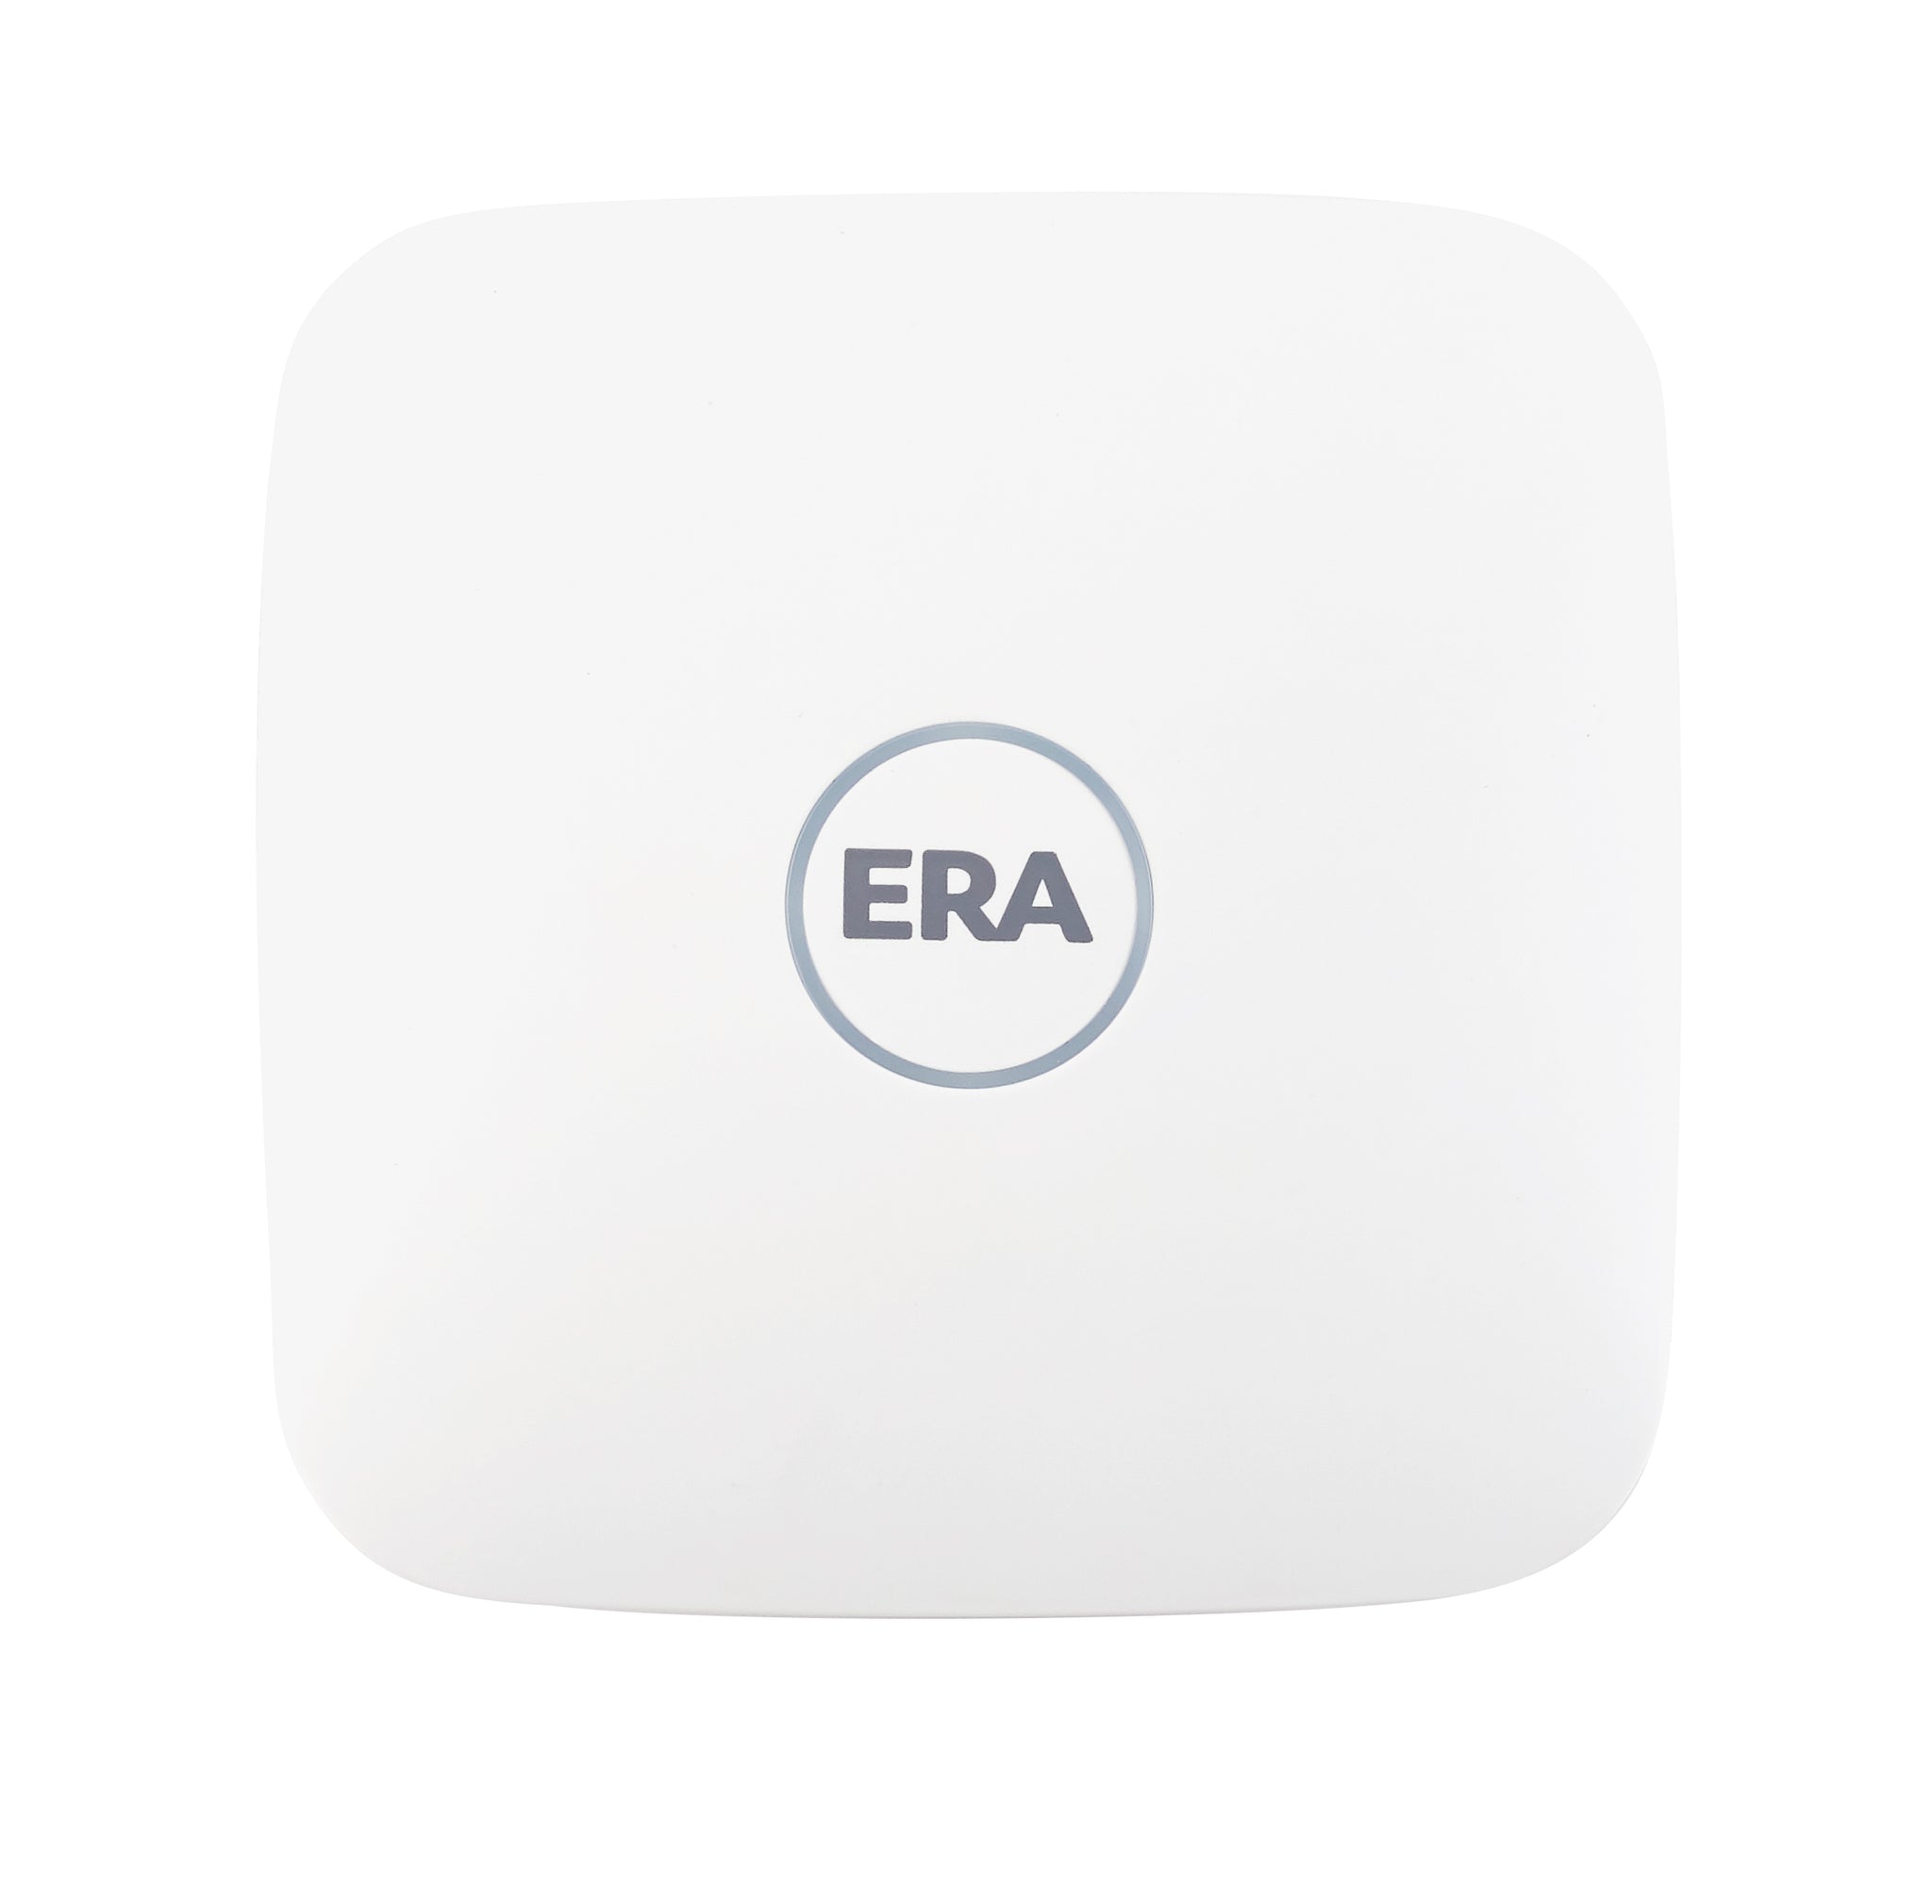 ERA Protect Smart Home Alarm Kit (6 Piece Bundle)